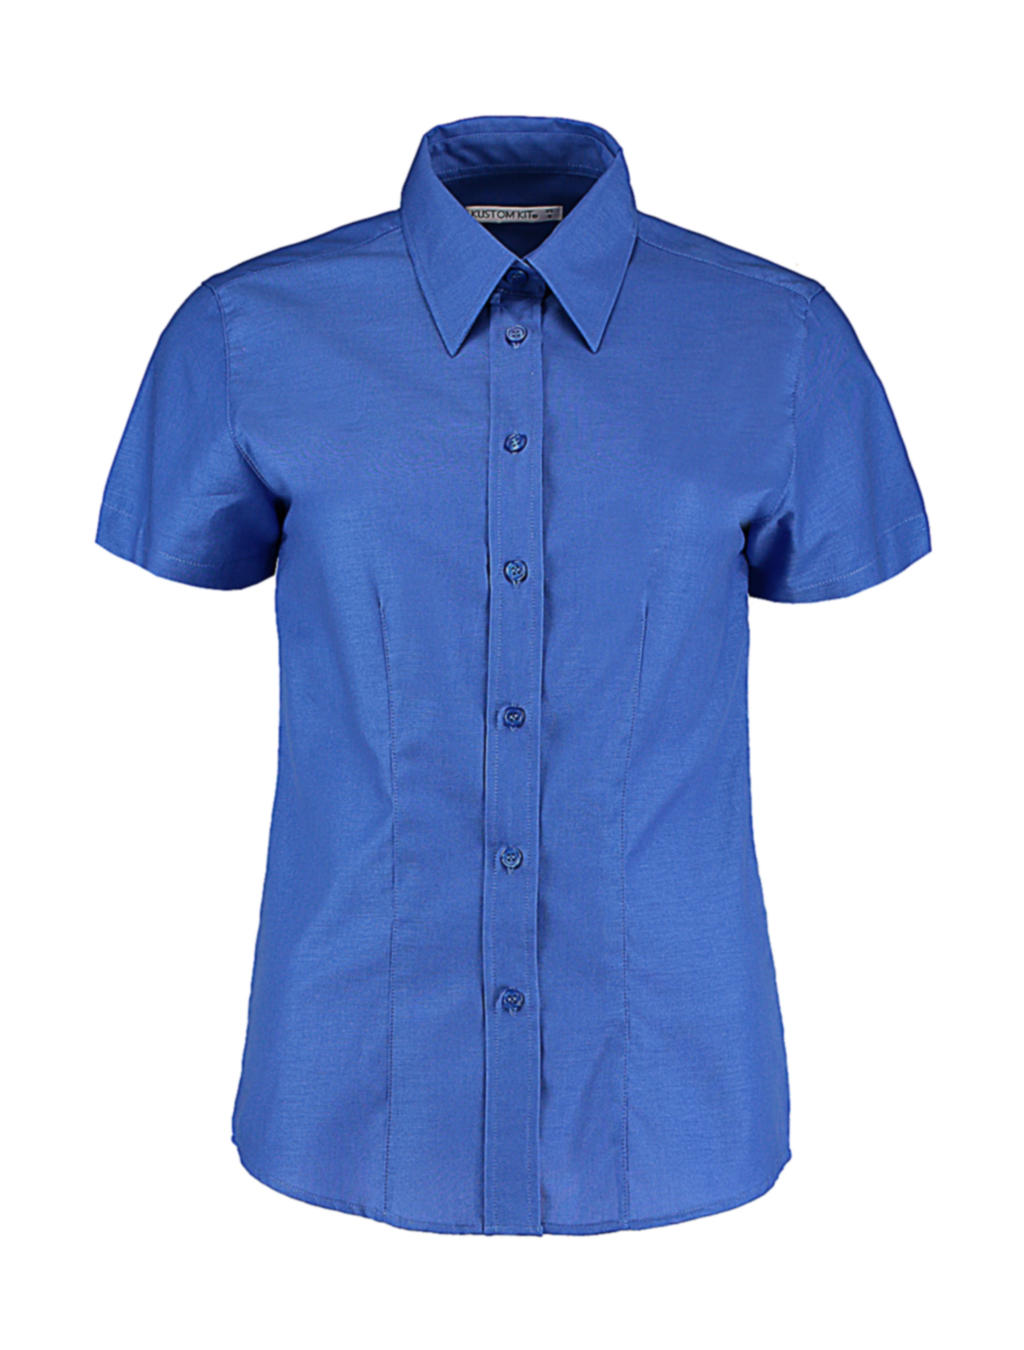  Womens Tailored Fit Workwear Oxford Shirt SSL in Farbe Italian Blue